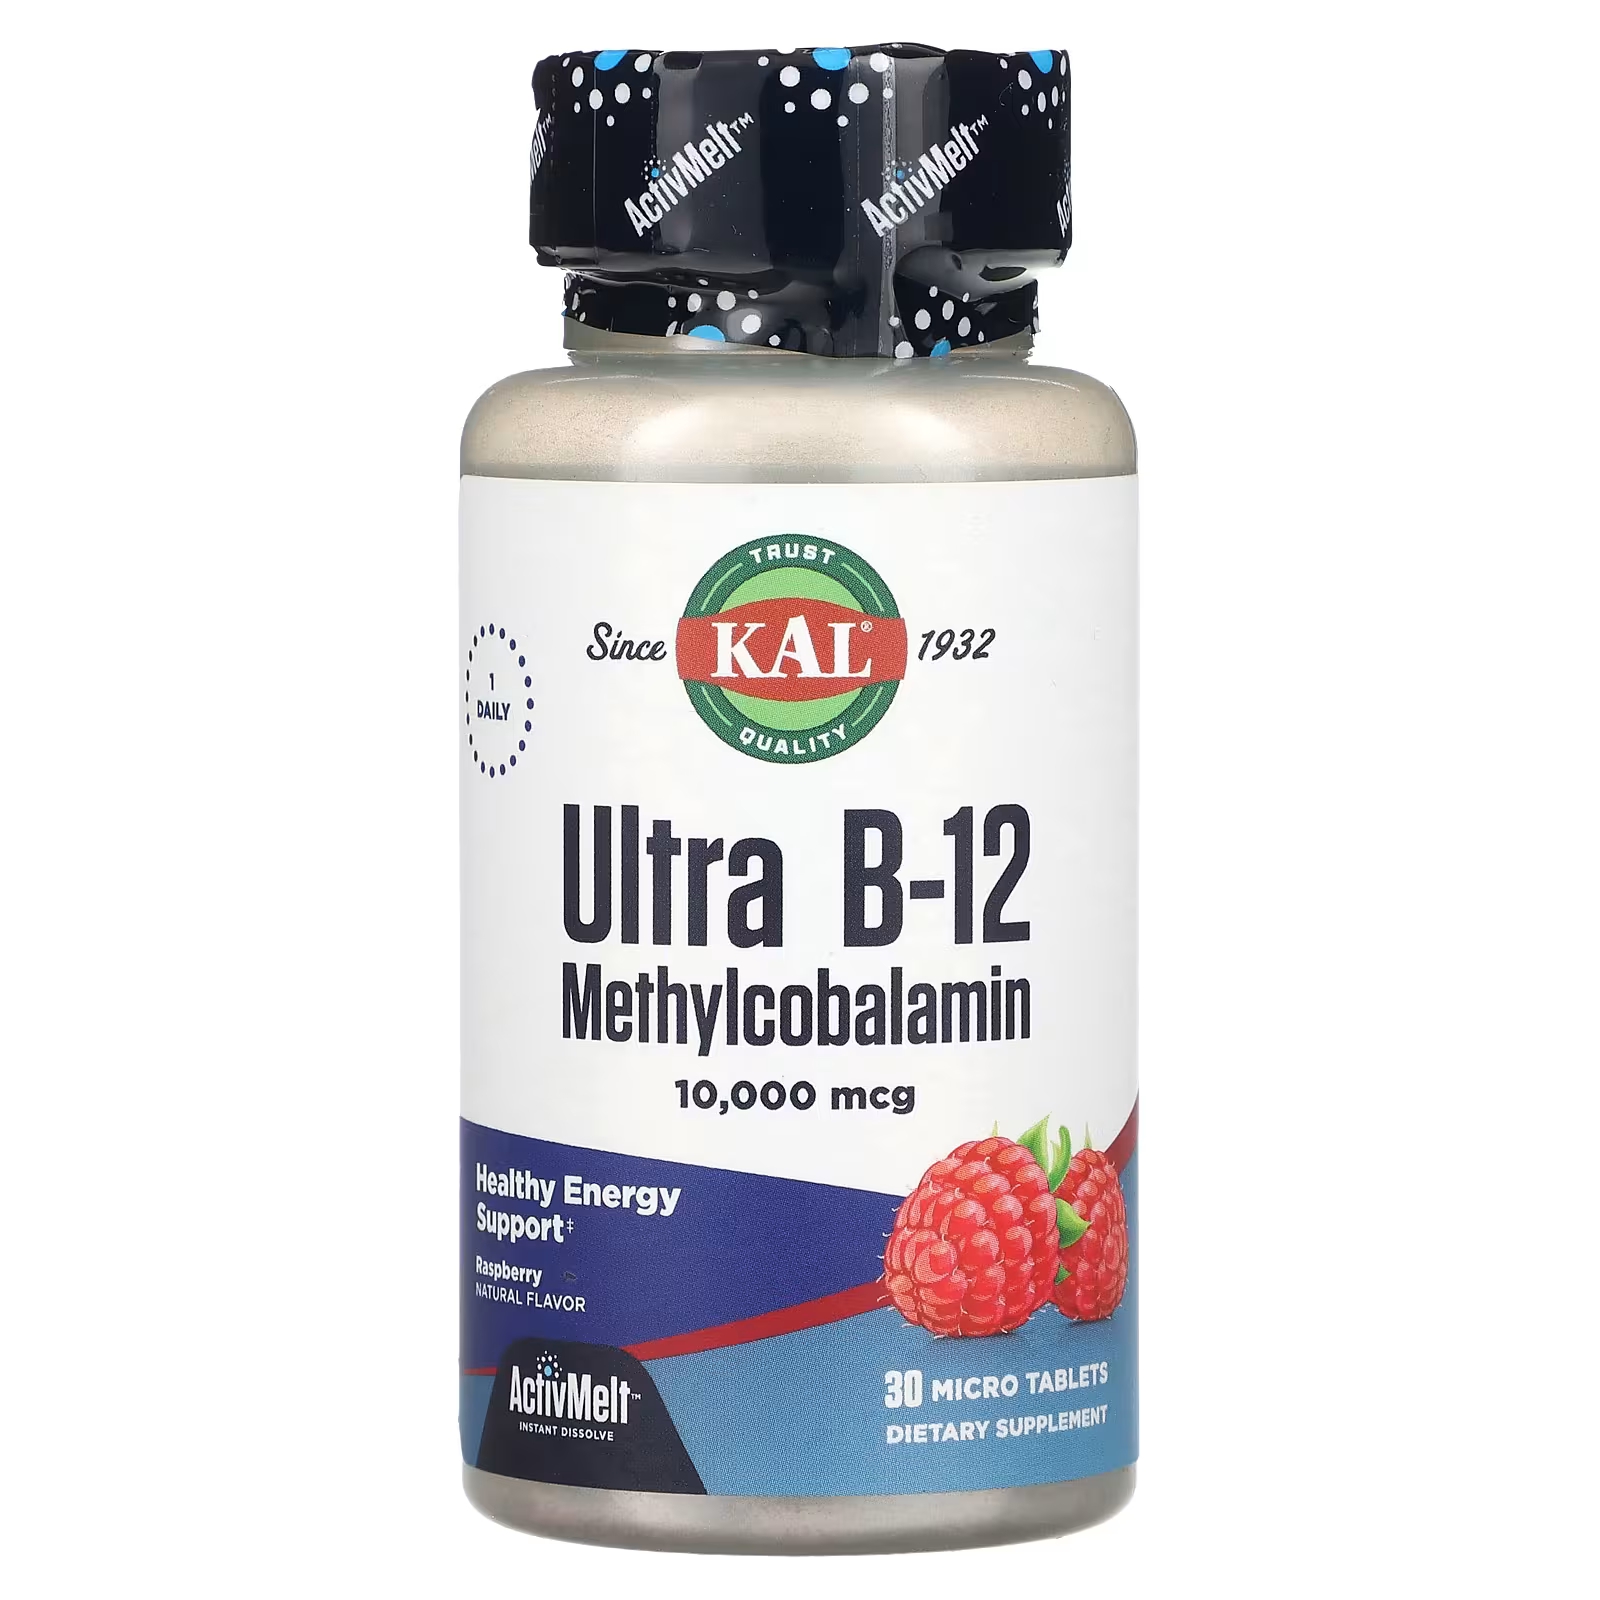 Метилкобаламин малина Kal Ultra B-12, 30 микротаблеток